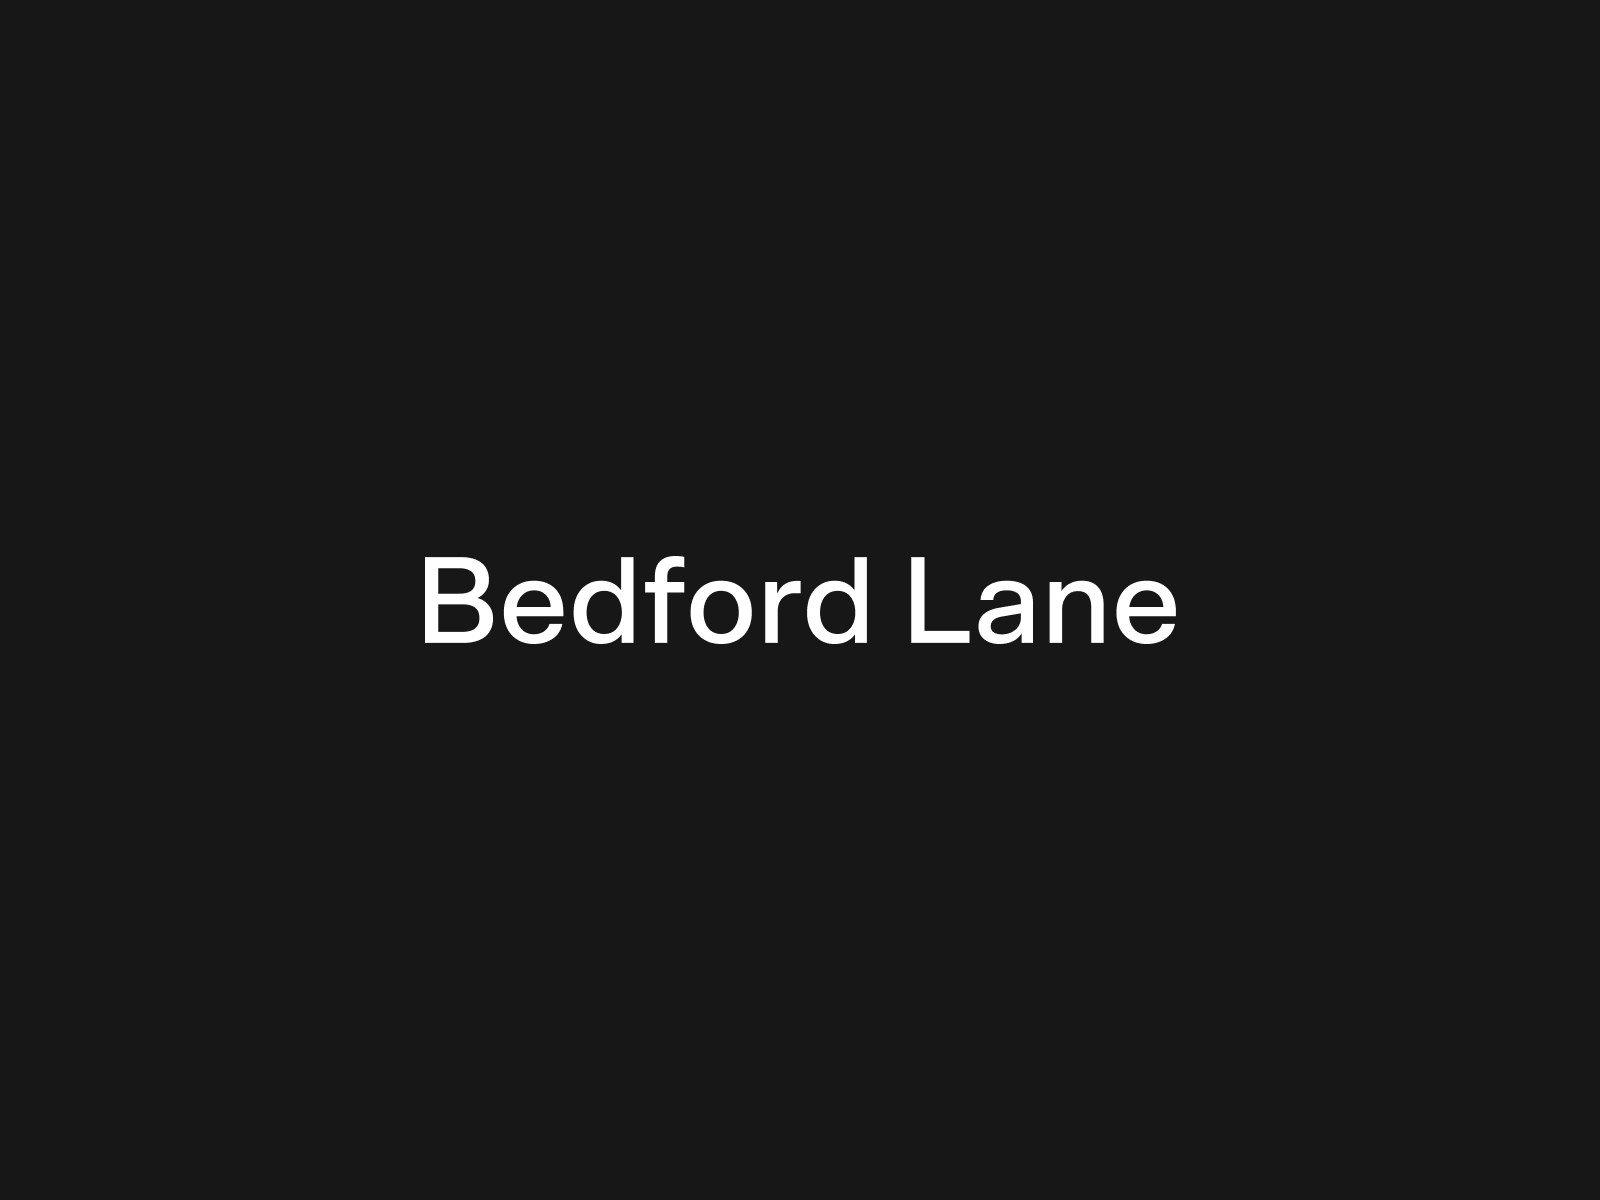 Bedford Lane